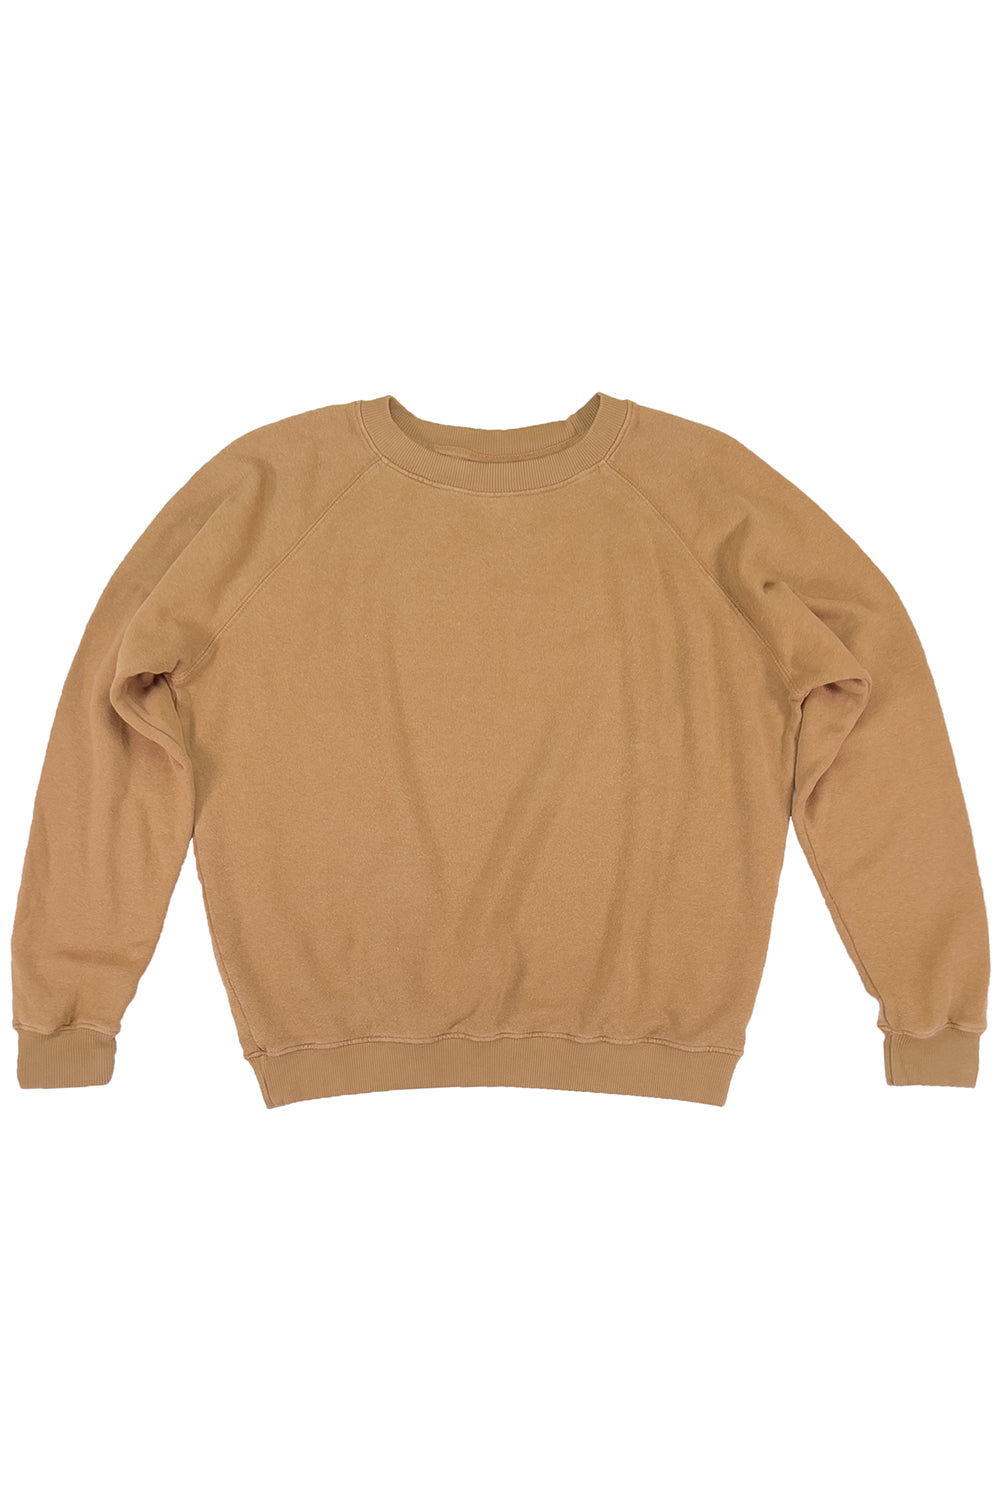 Bonfire Raglan Sweatshirt | Jungmaven Hemp Clothing